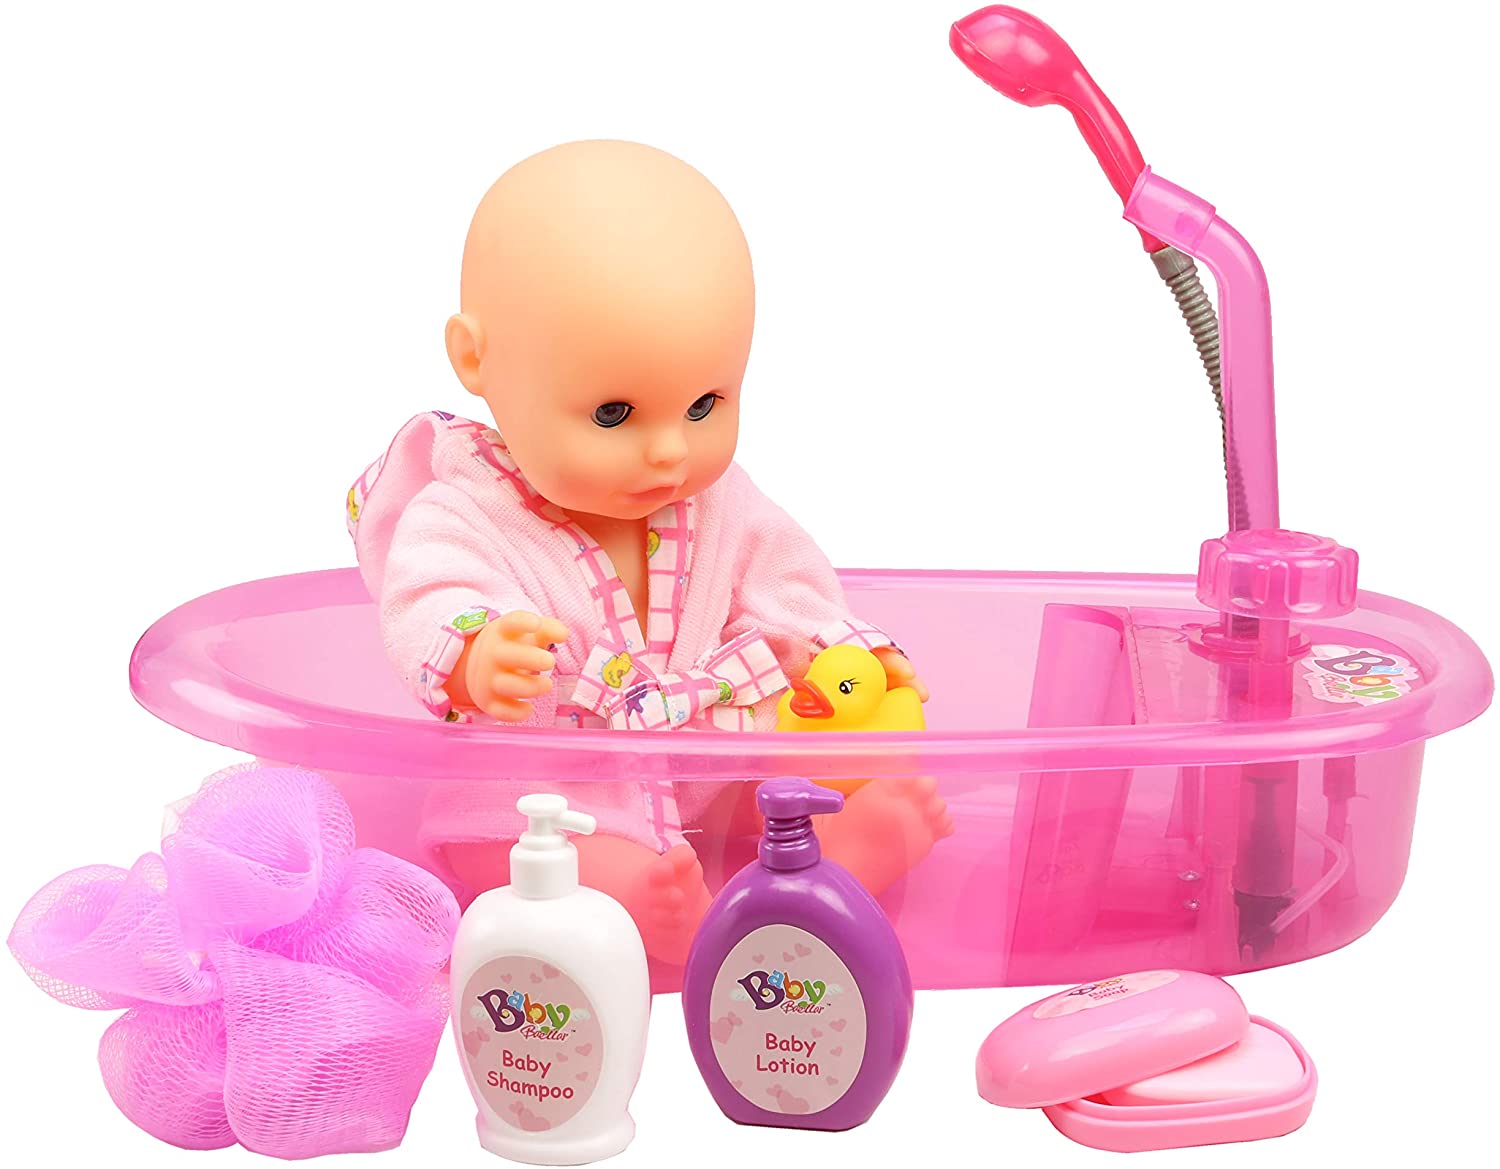 Kmart Baby Doll Bath Time Set